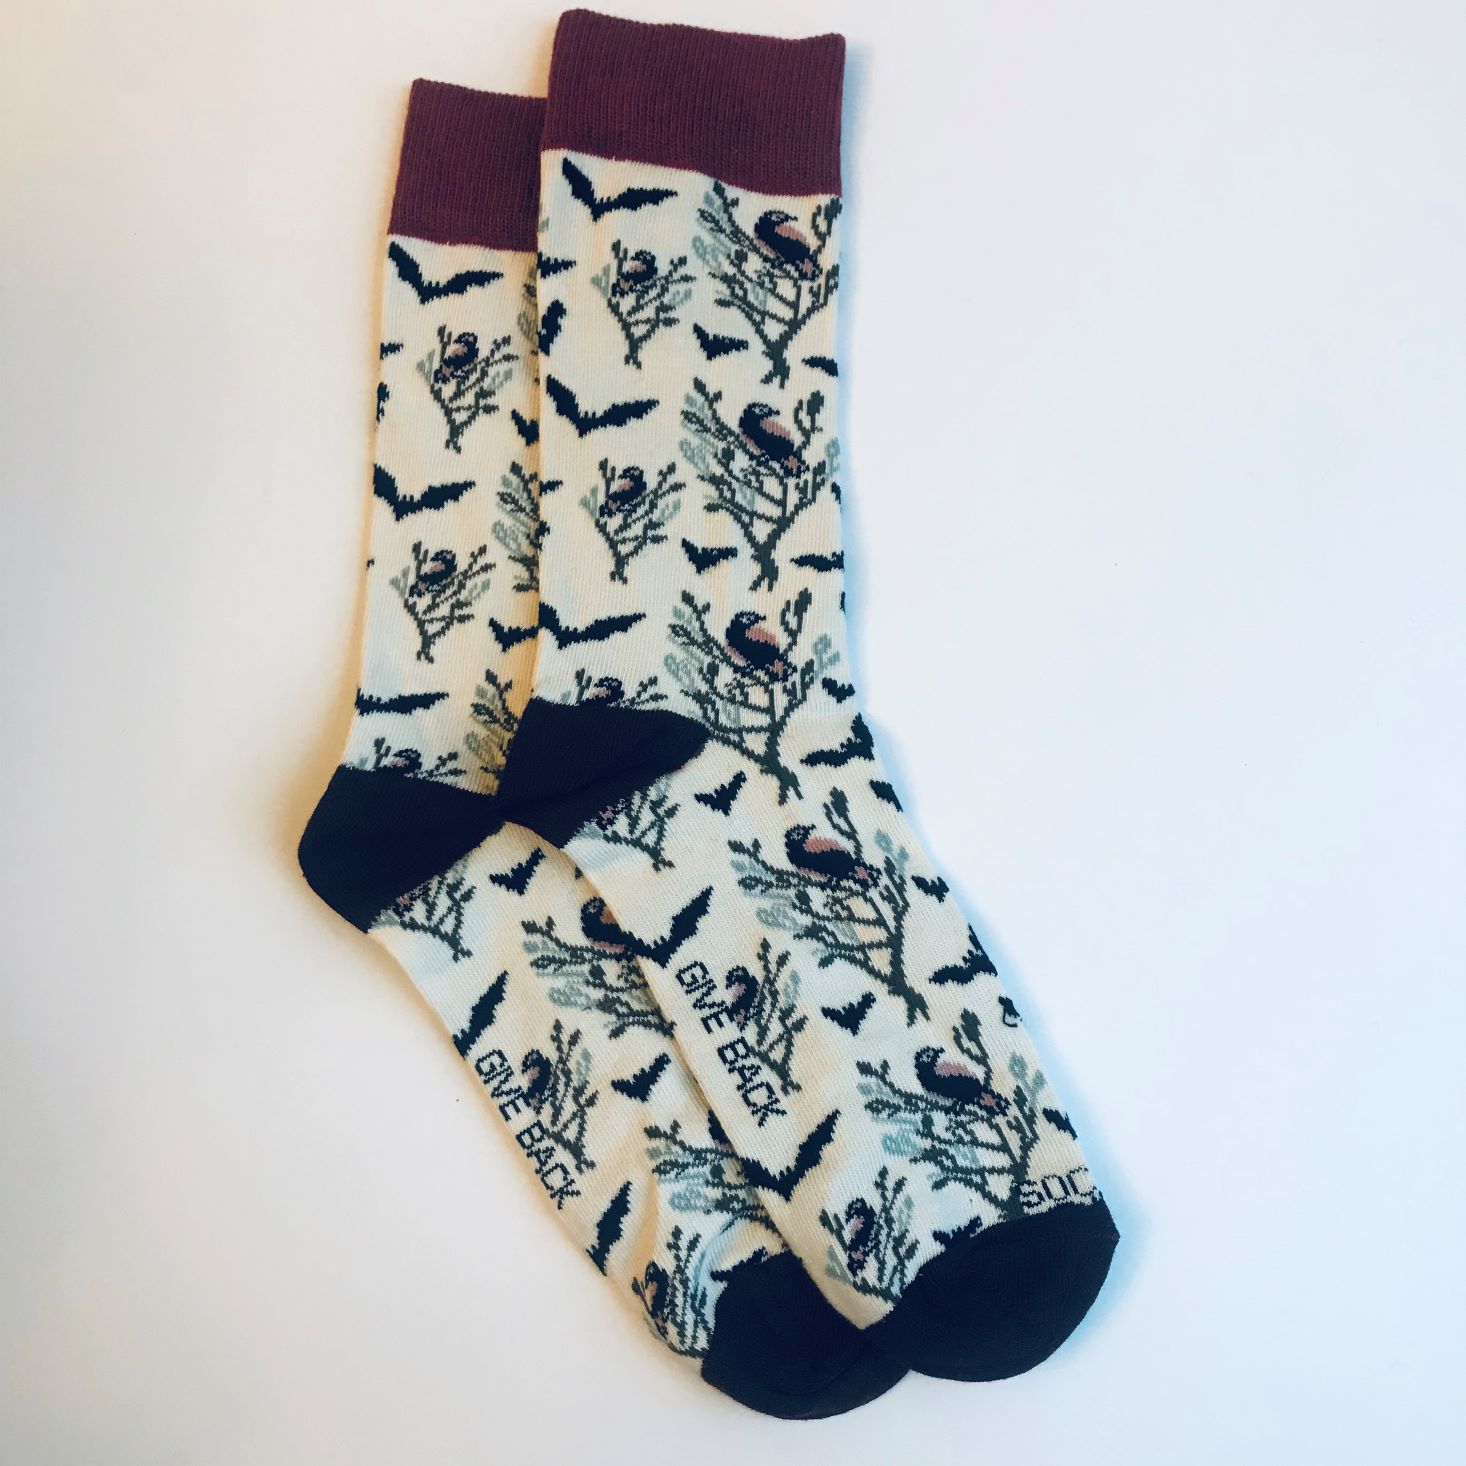 Sock Panda November 2019 white socks laid out side by side